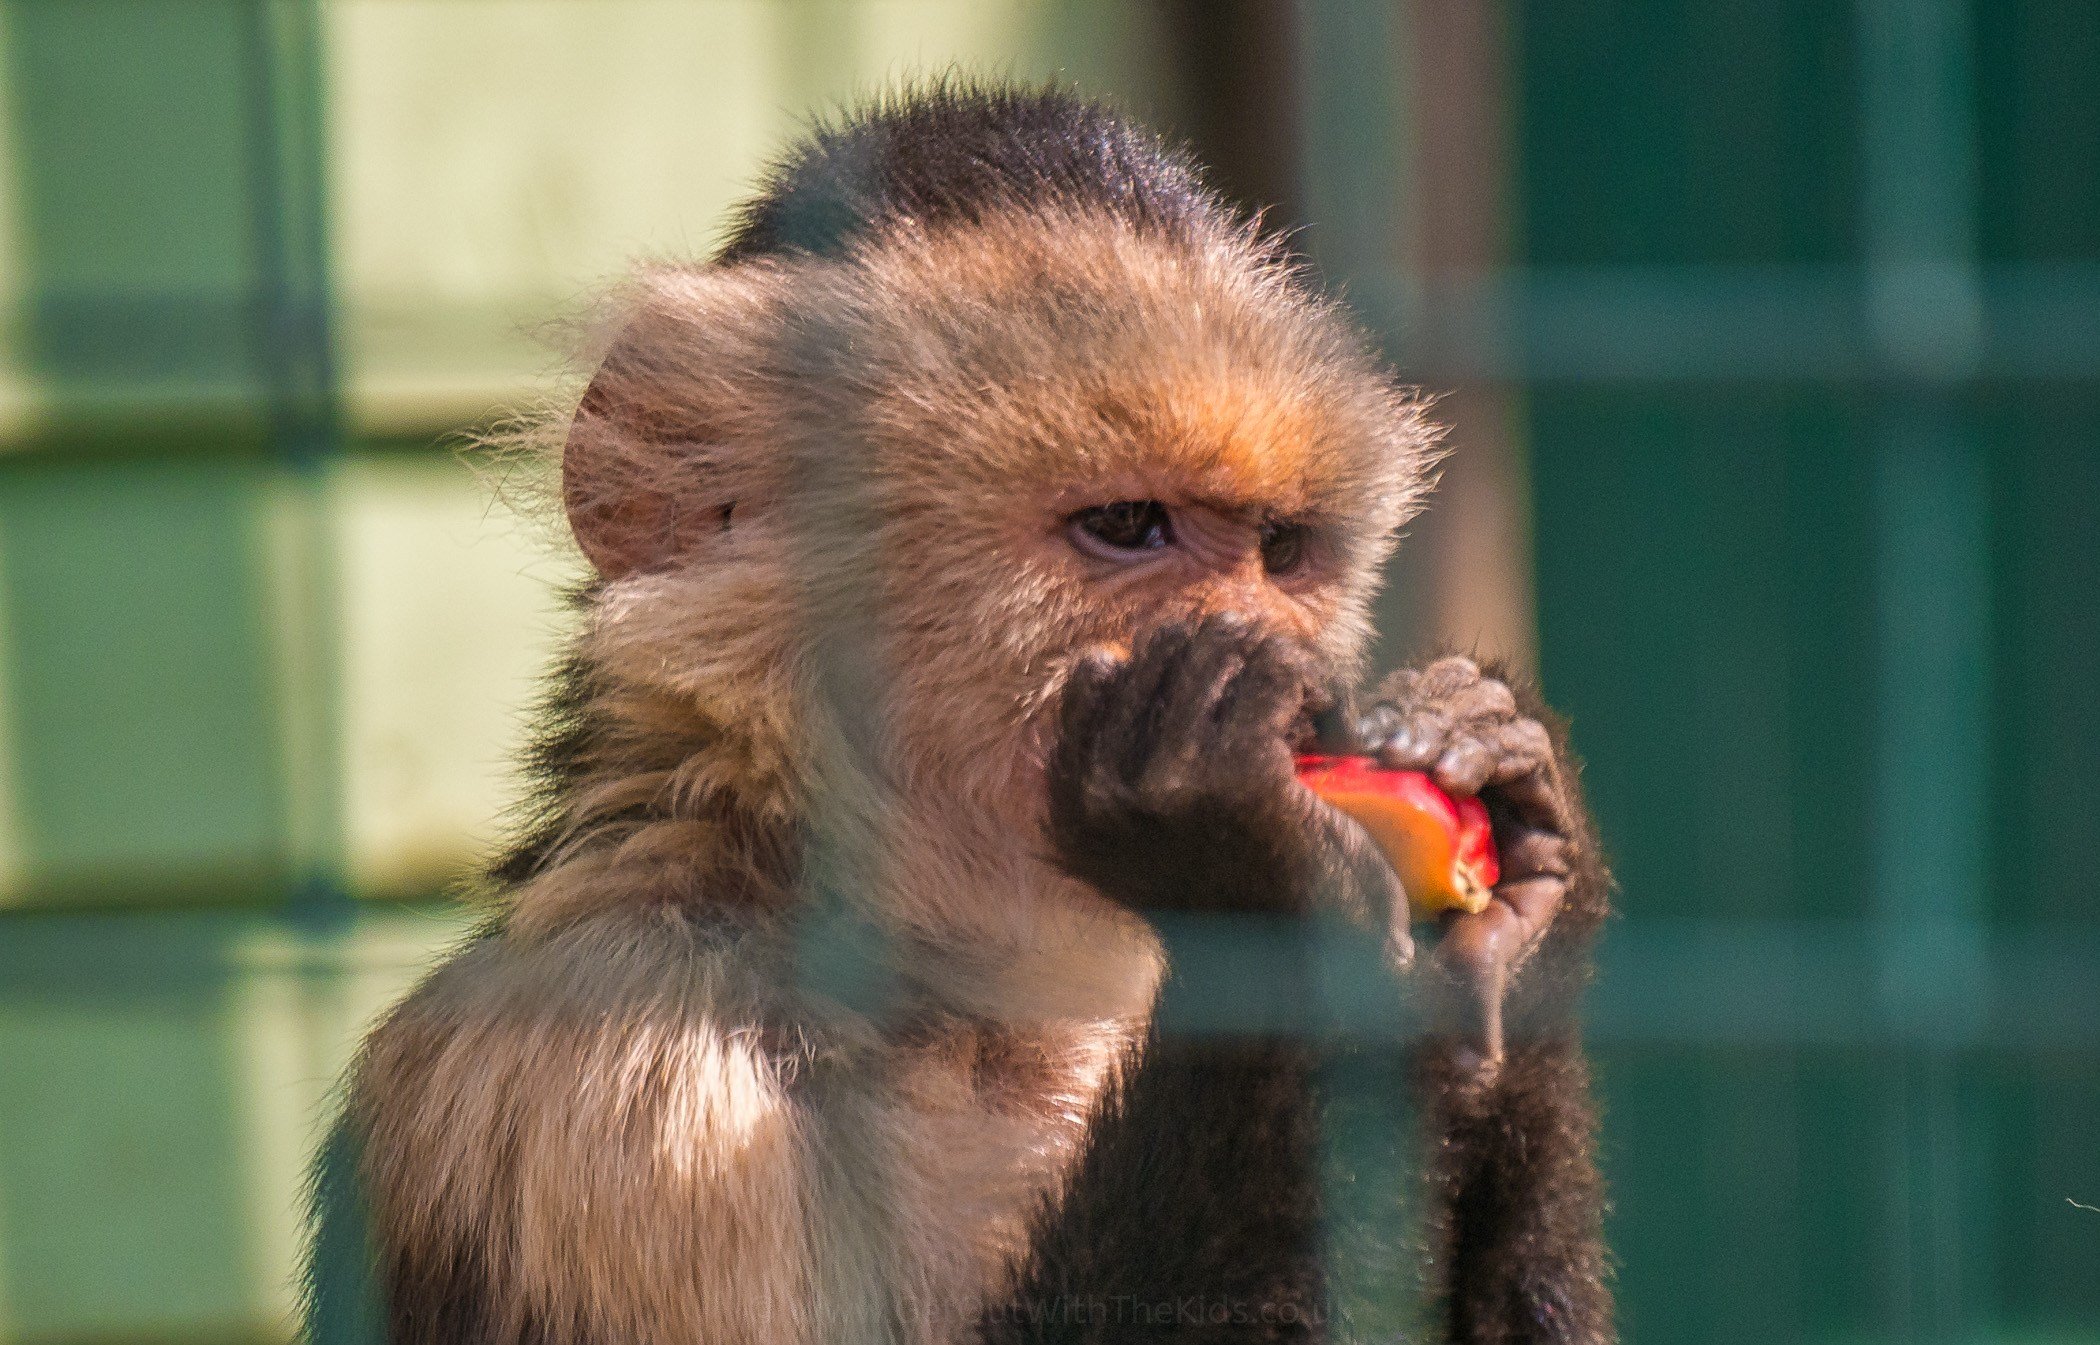 Monkey eating on food